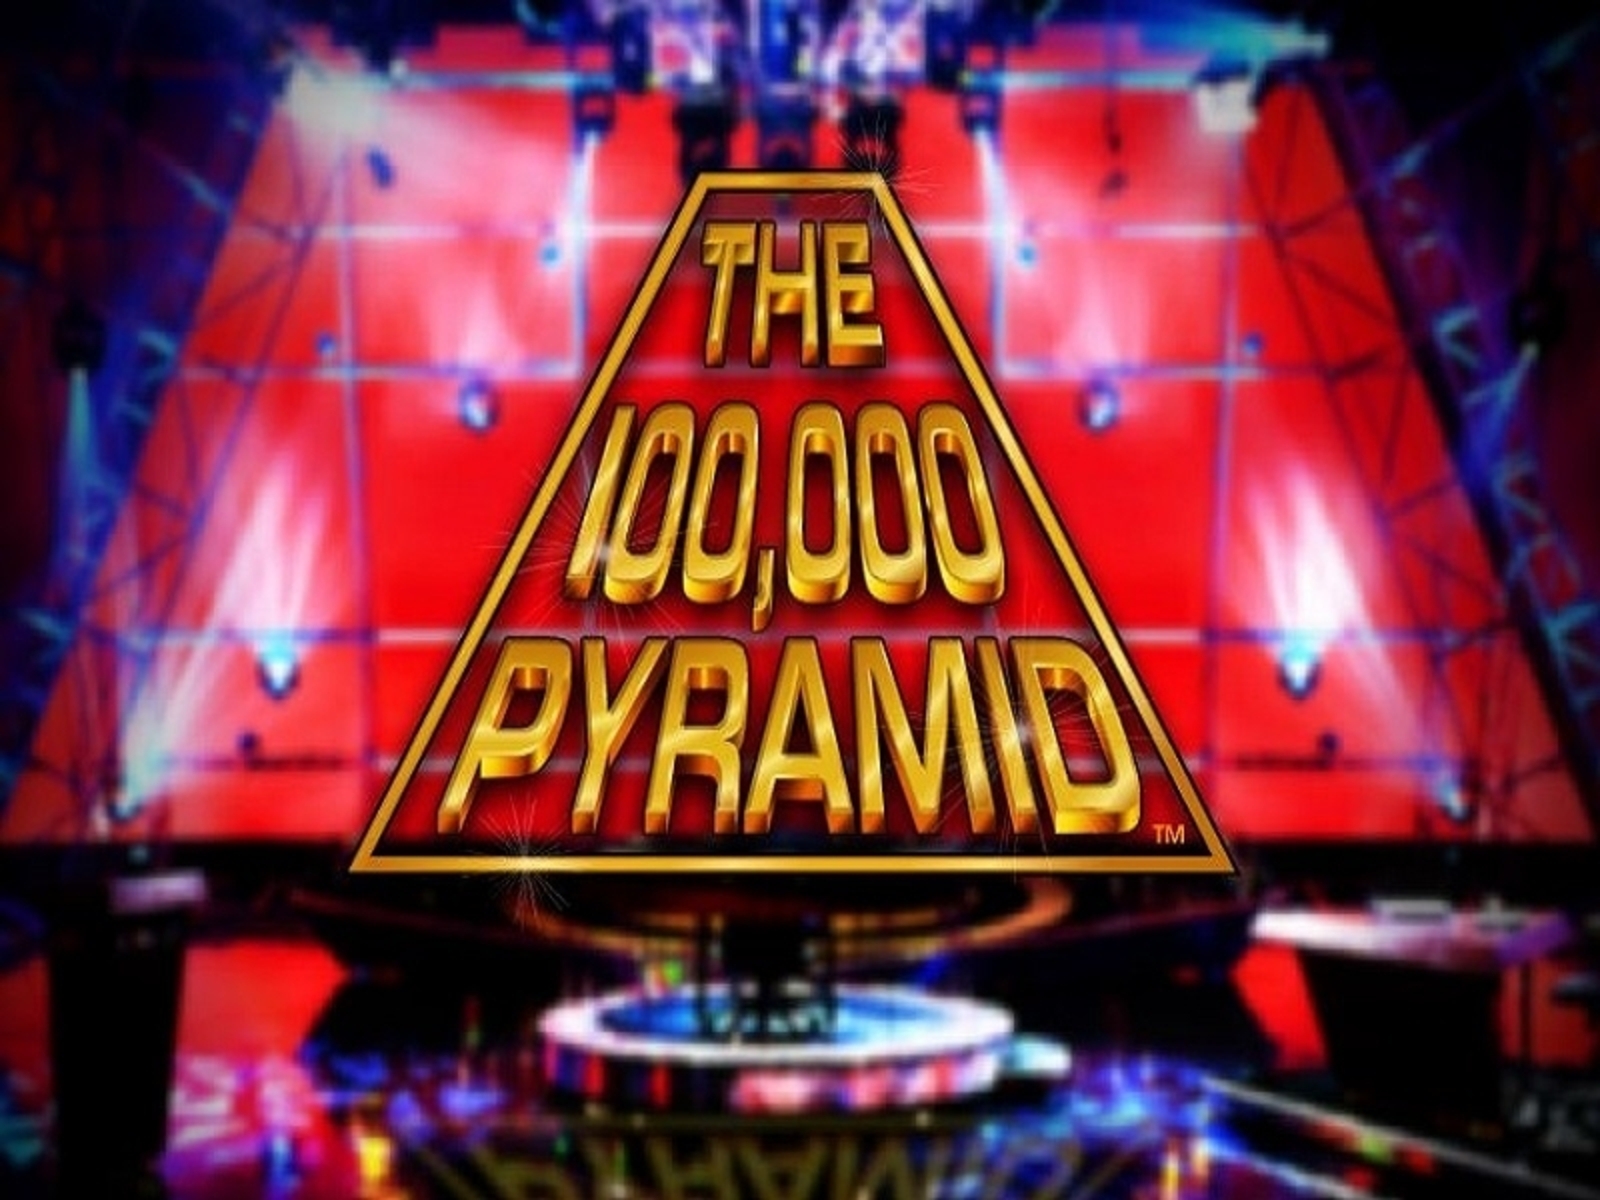 The 100,000 Pyramid demo